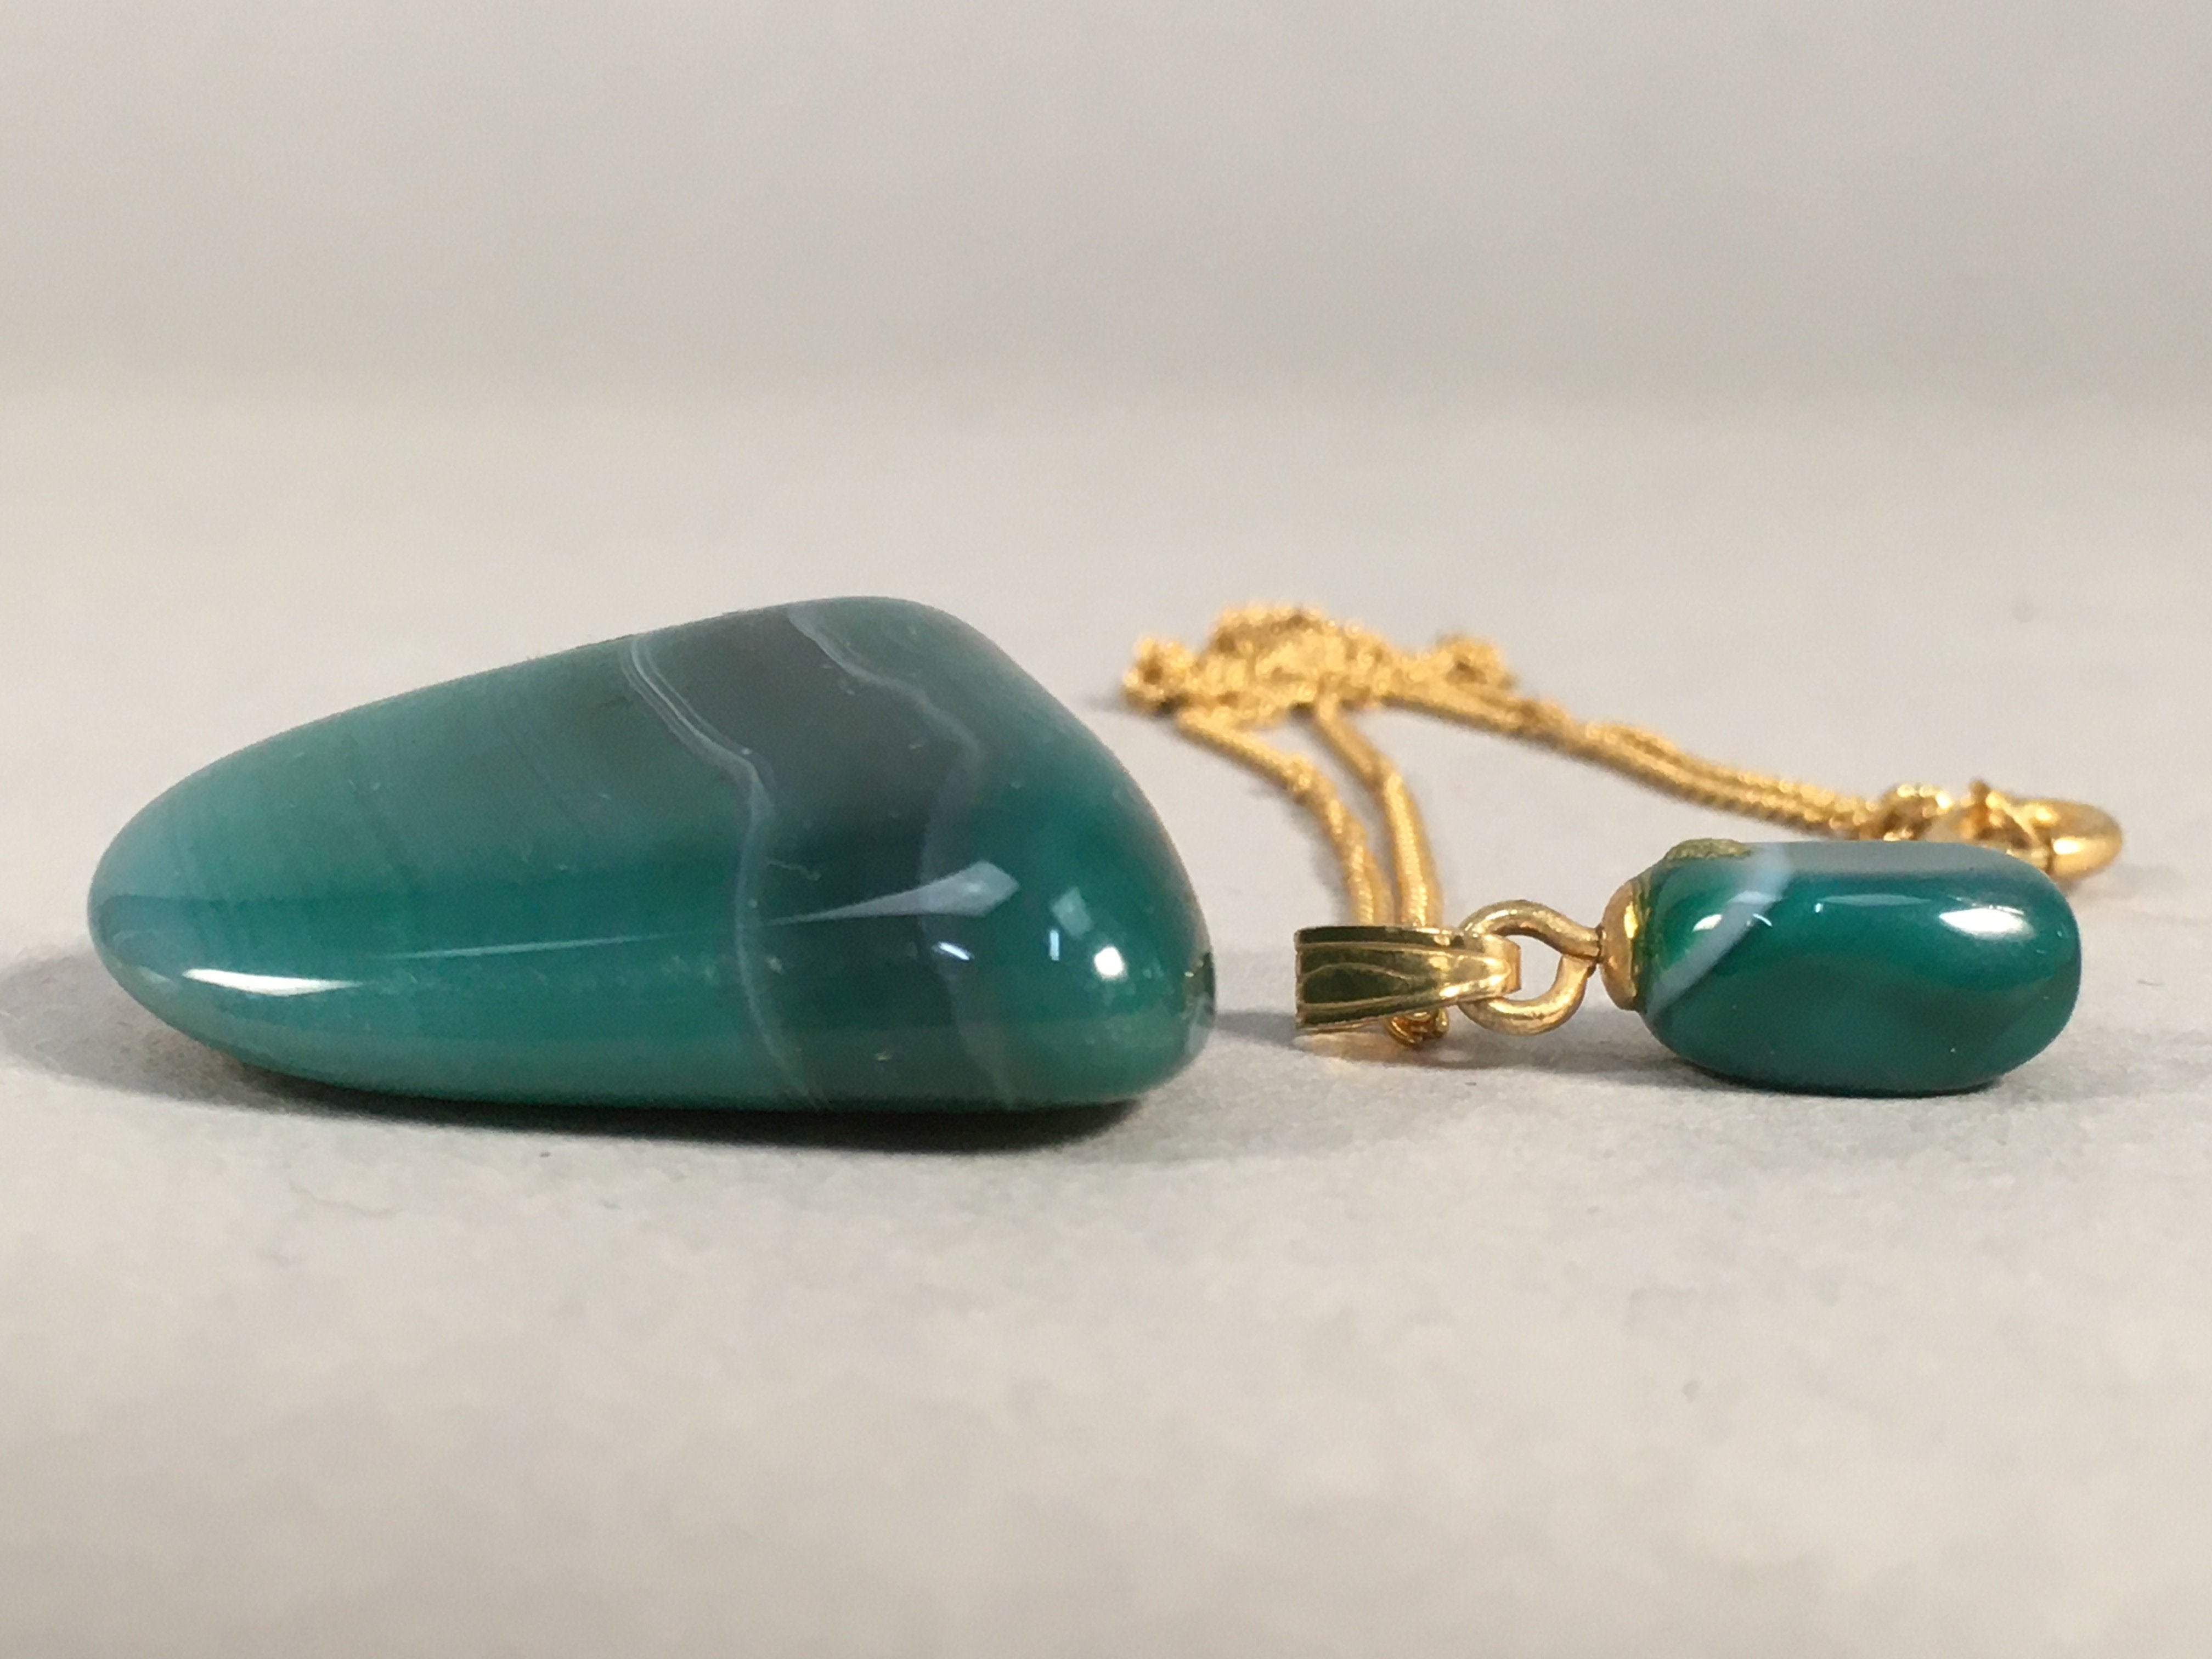 Japanese Necklace Pendant Green Stone Vtg Set 38cm Long Gold Color Chain JK37